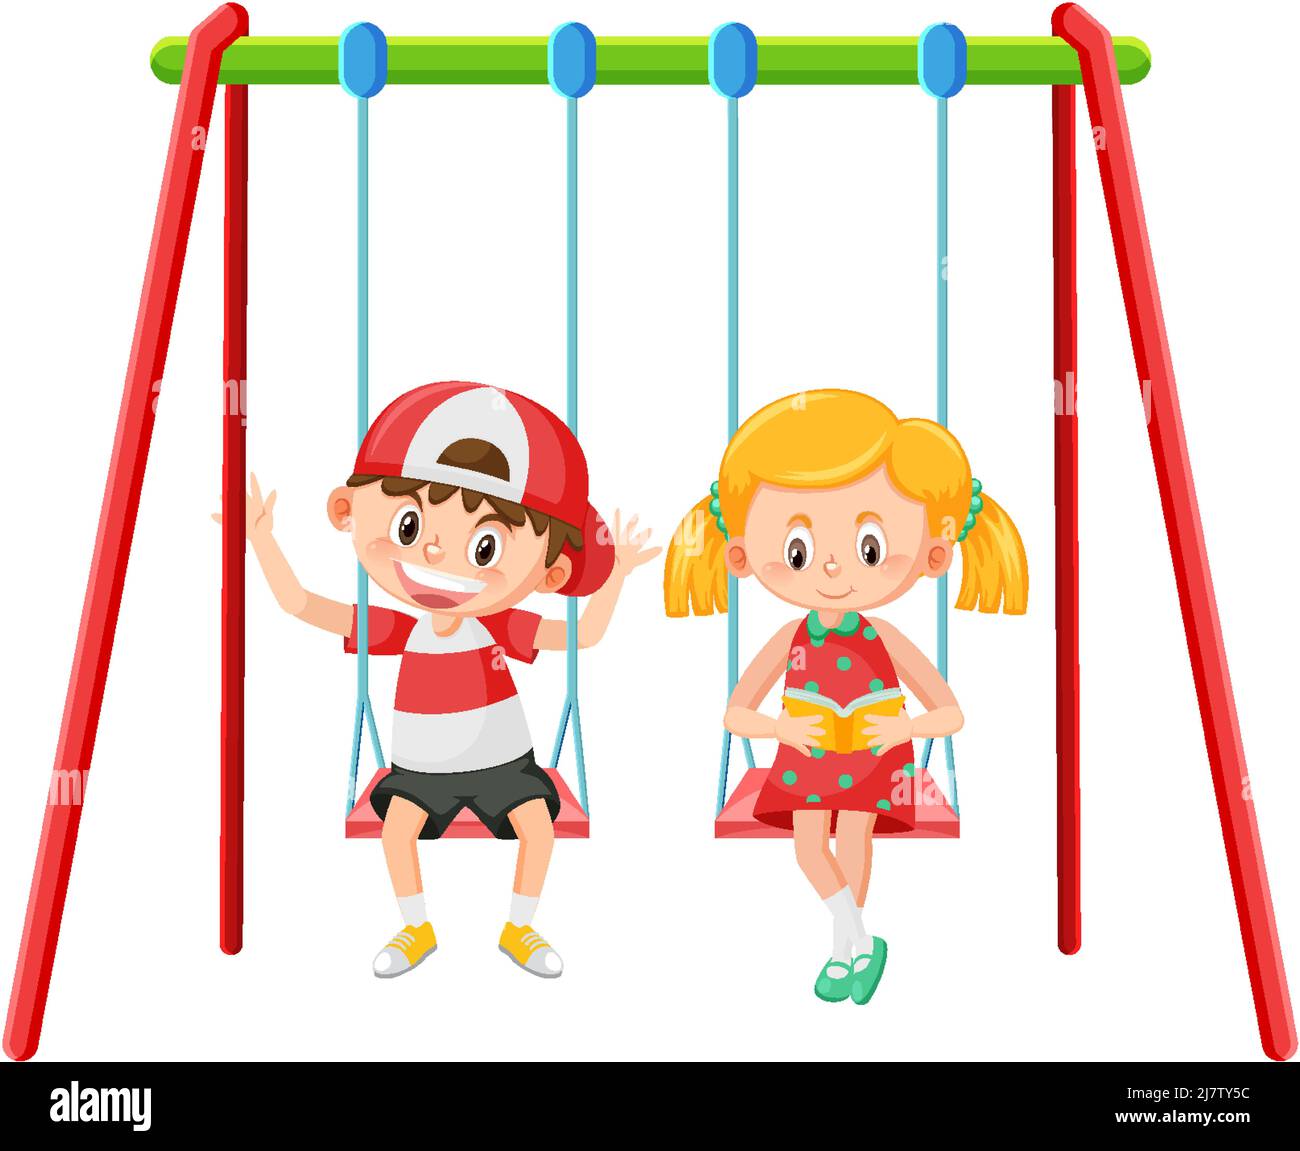 Kid on swing set playground on white background illustration Stock ...